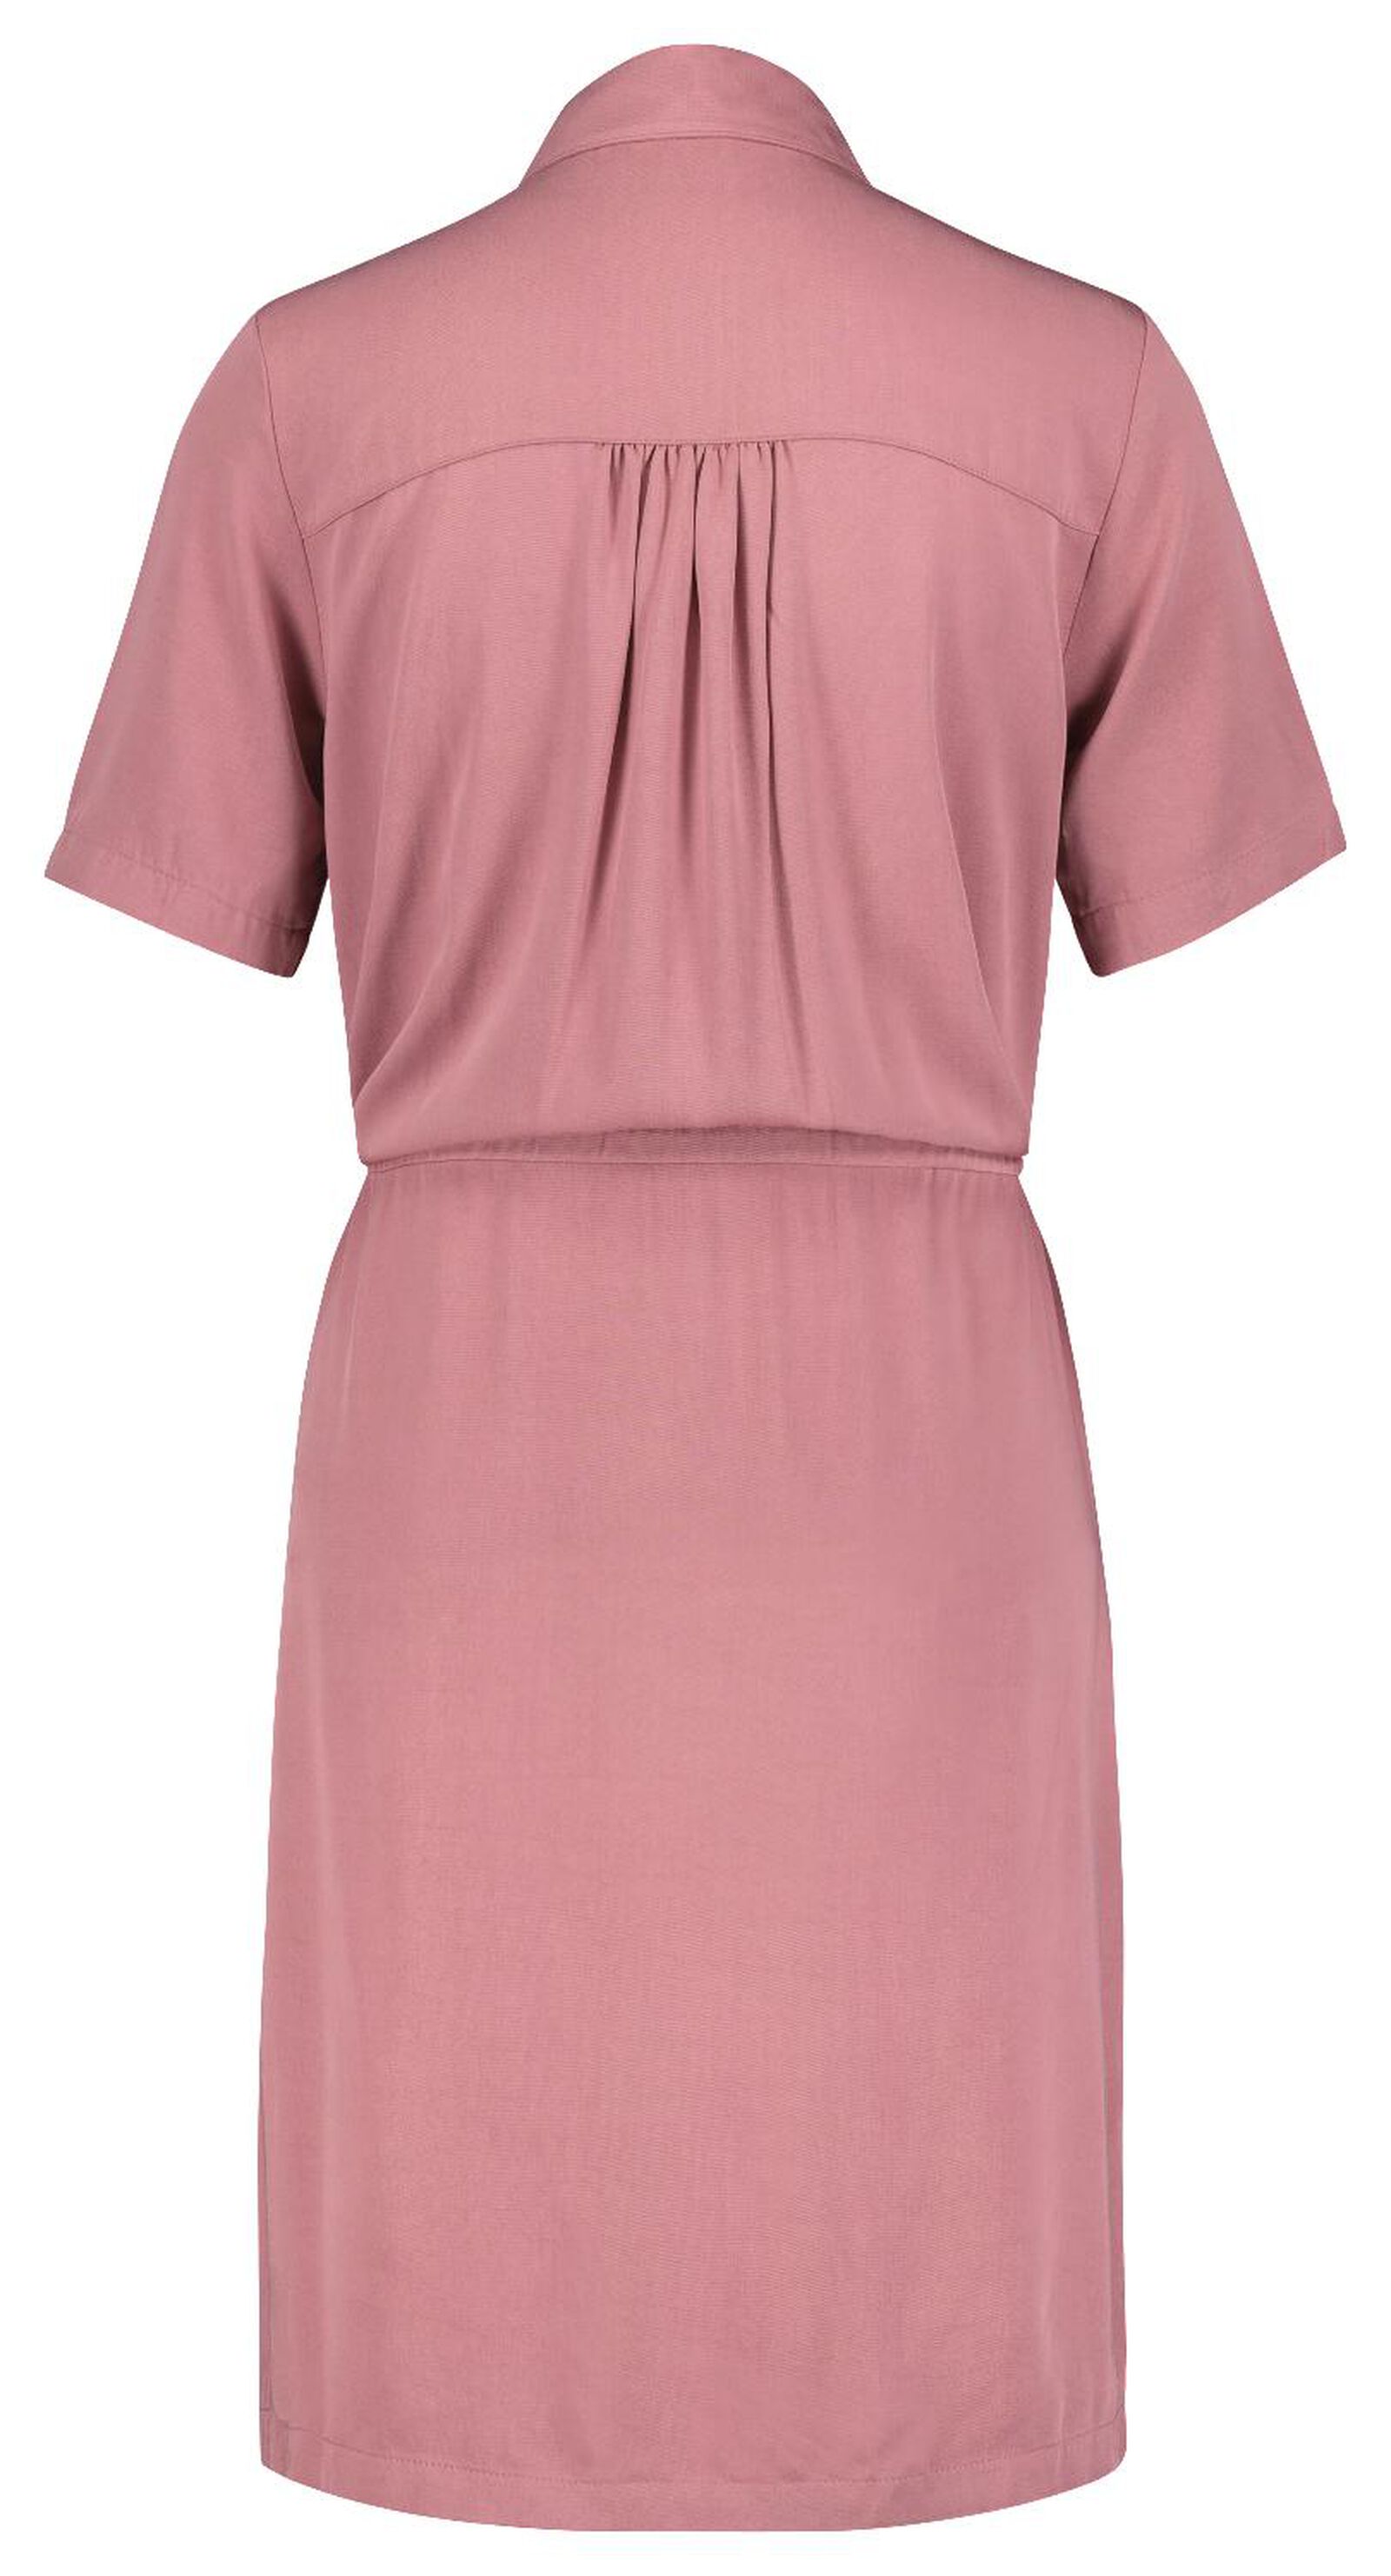 robe femme rose XL - 36259889 - HEMA